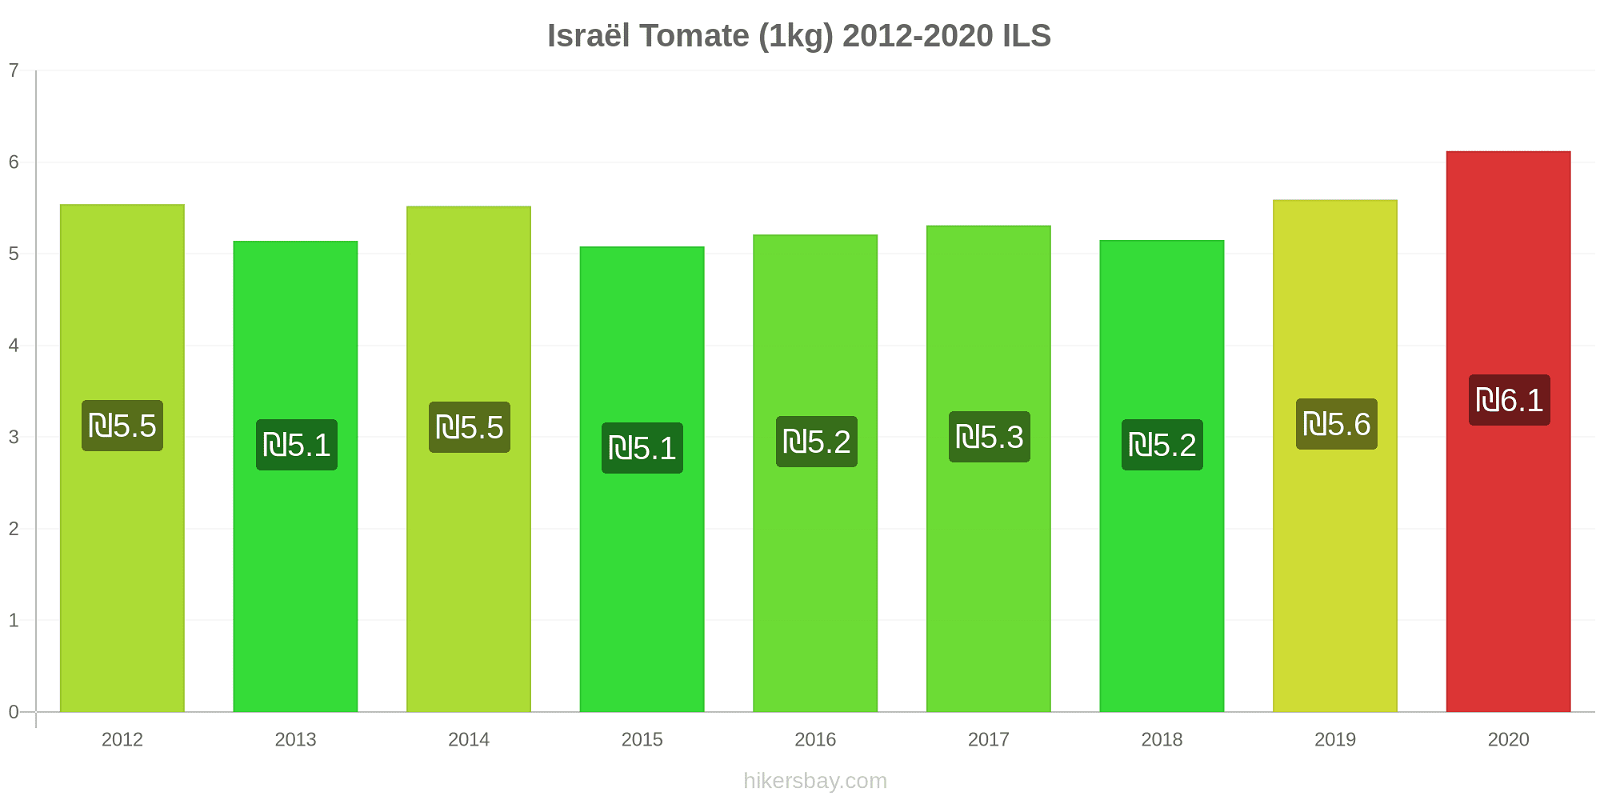 Israël changements de prix Tomate (1kg) hikersbay.com